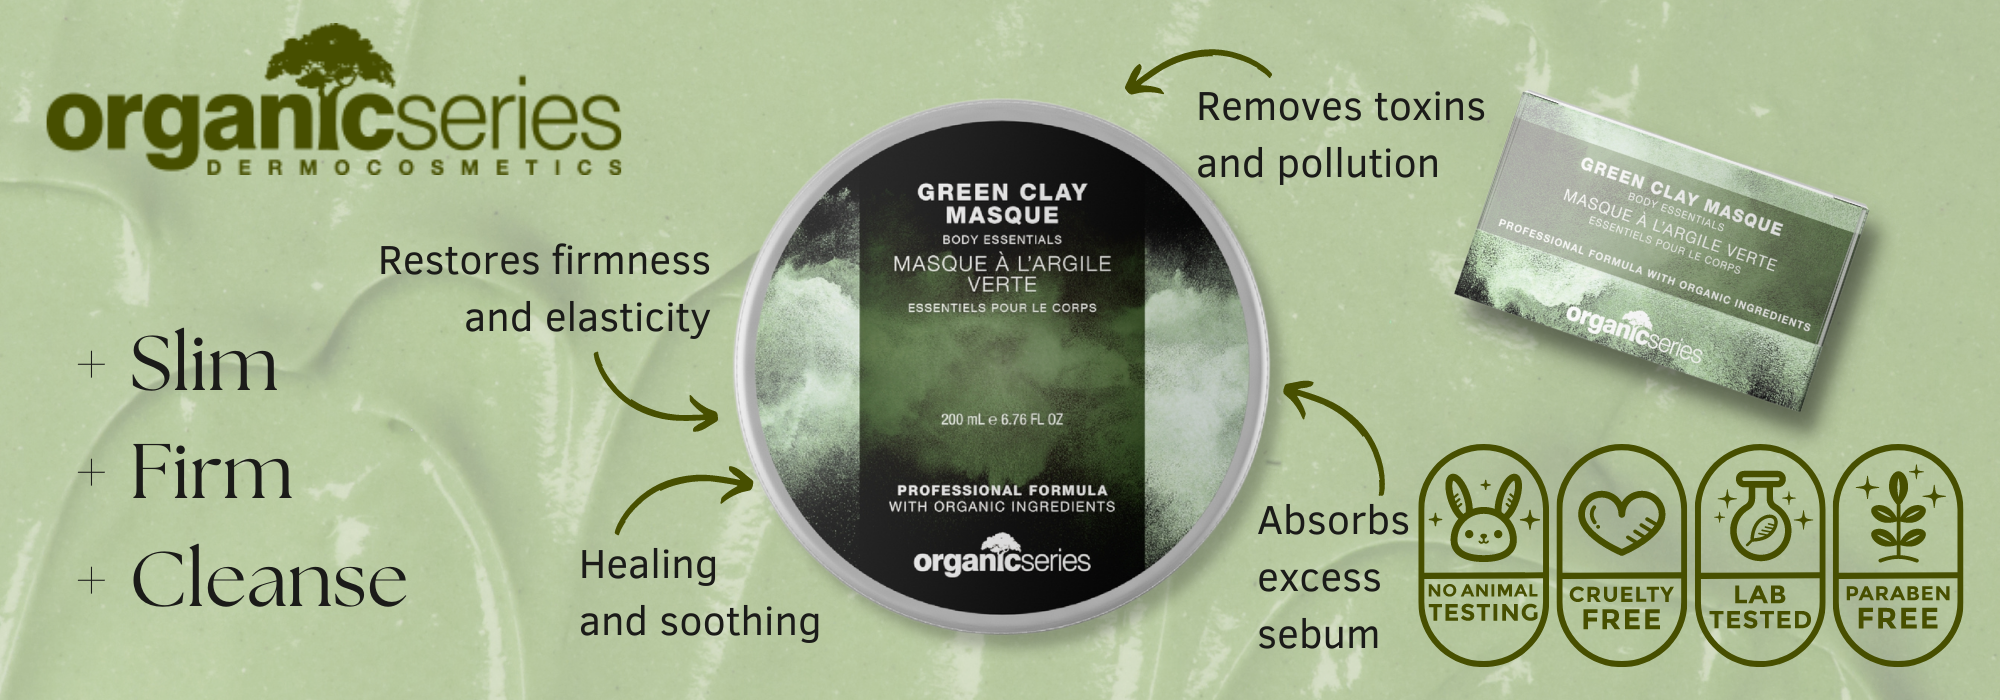  green clay mask facial by organic series